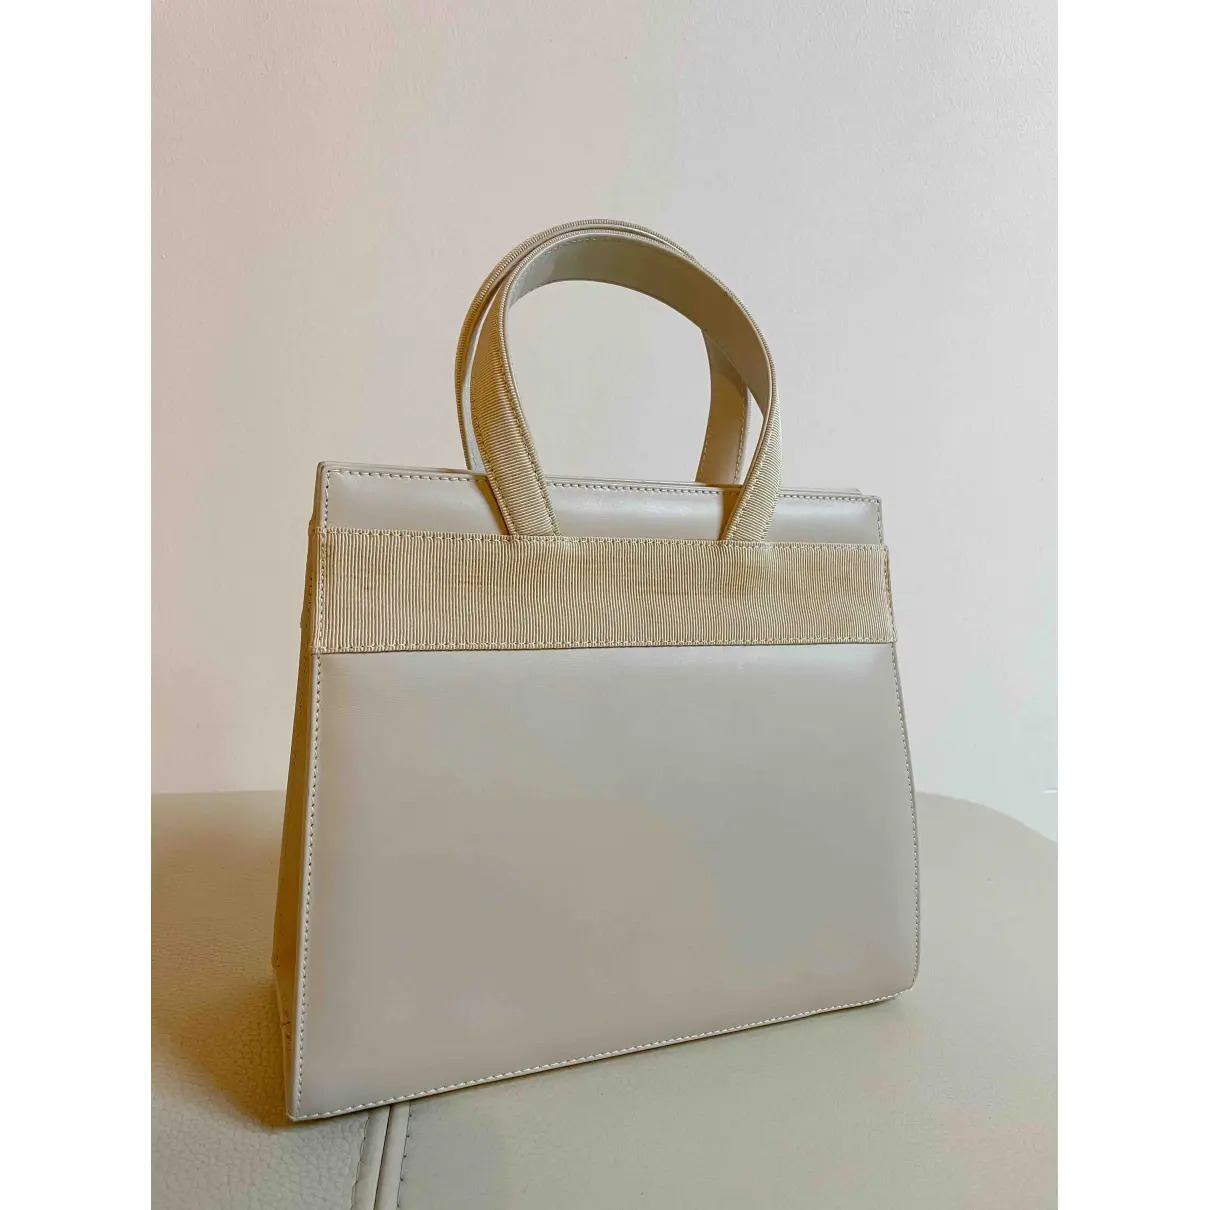 Buy Salvatore Ferragamo Vara leather clutch bag online